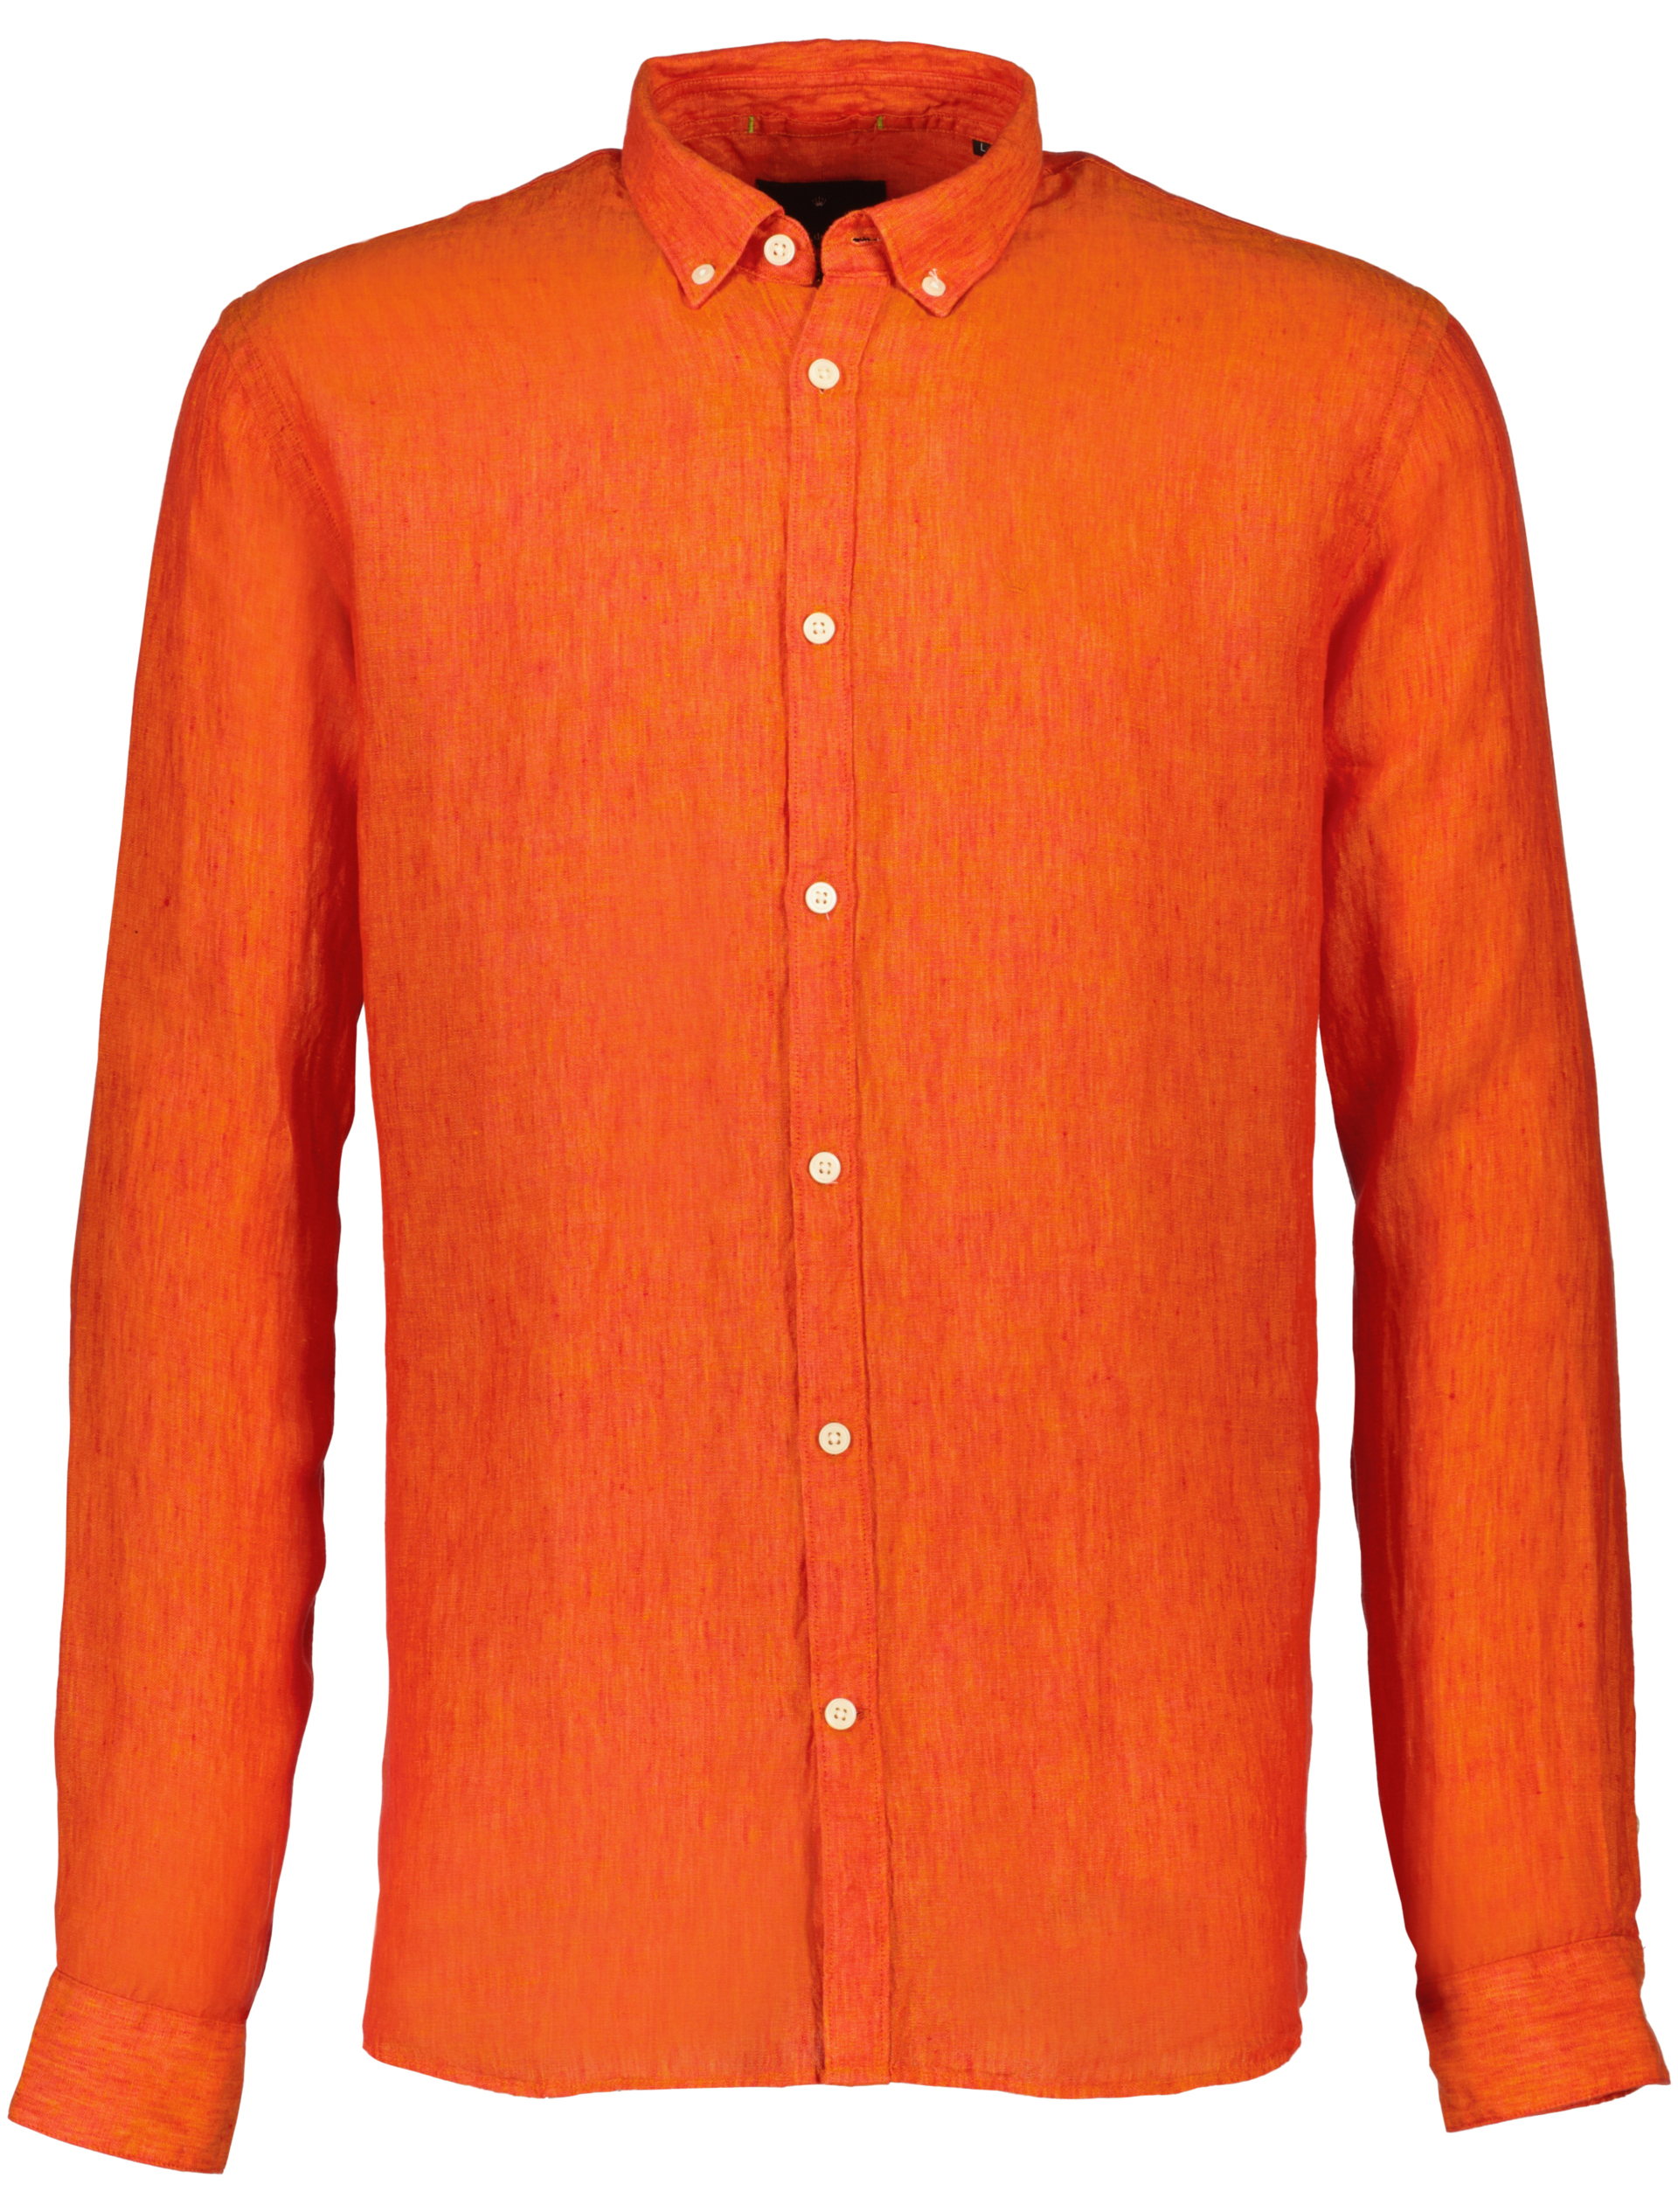 Junk de Luxe Linen shirt orange / orange mel